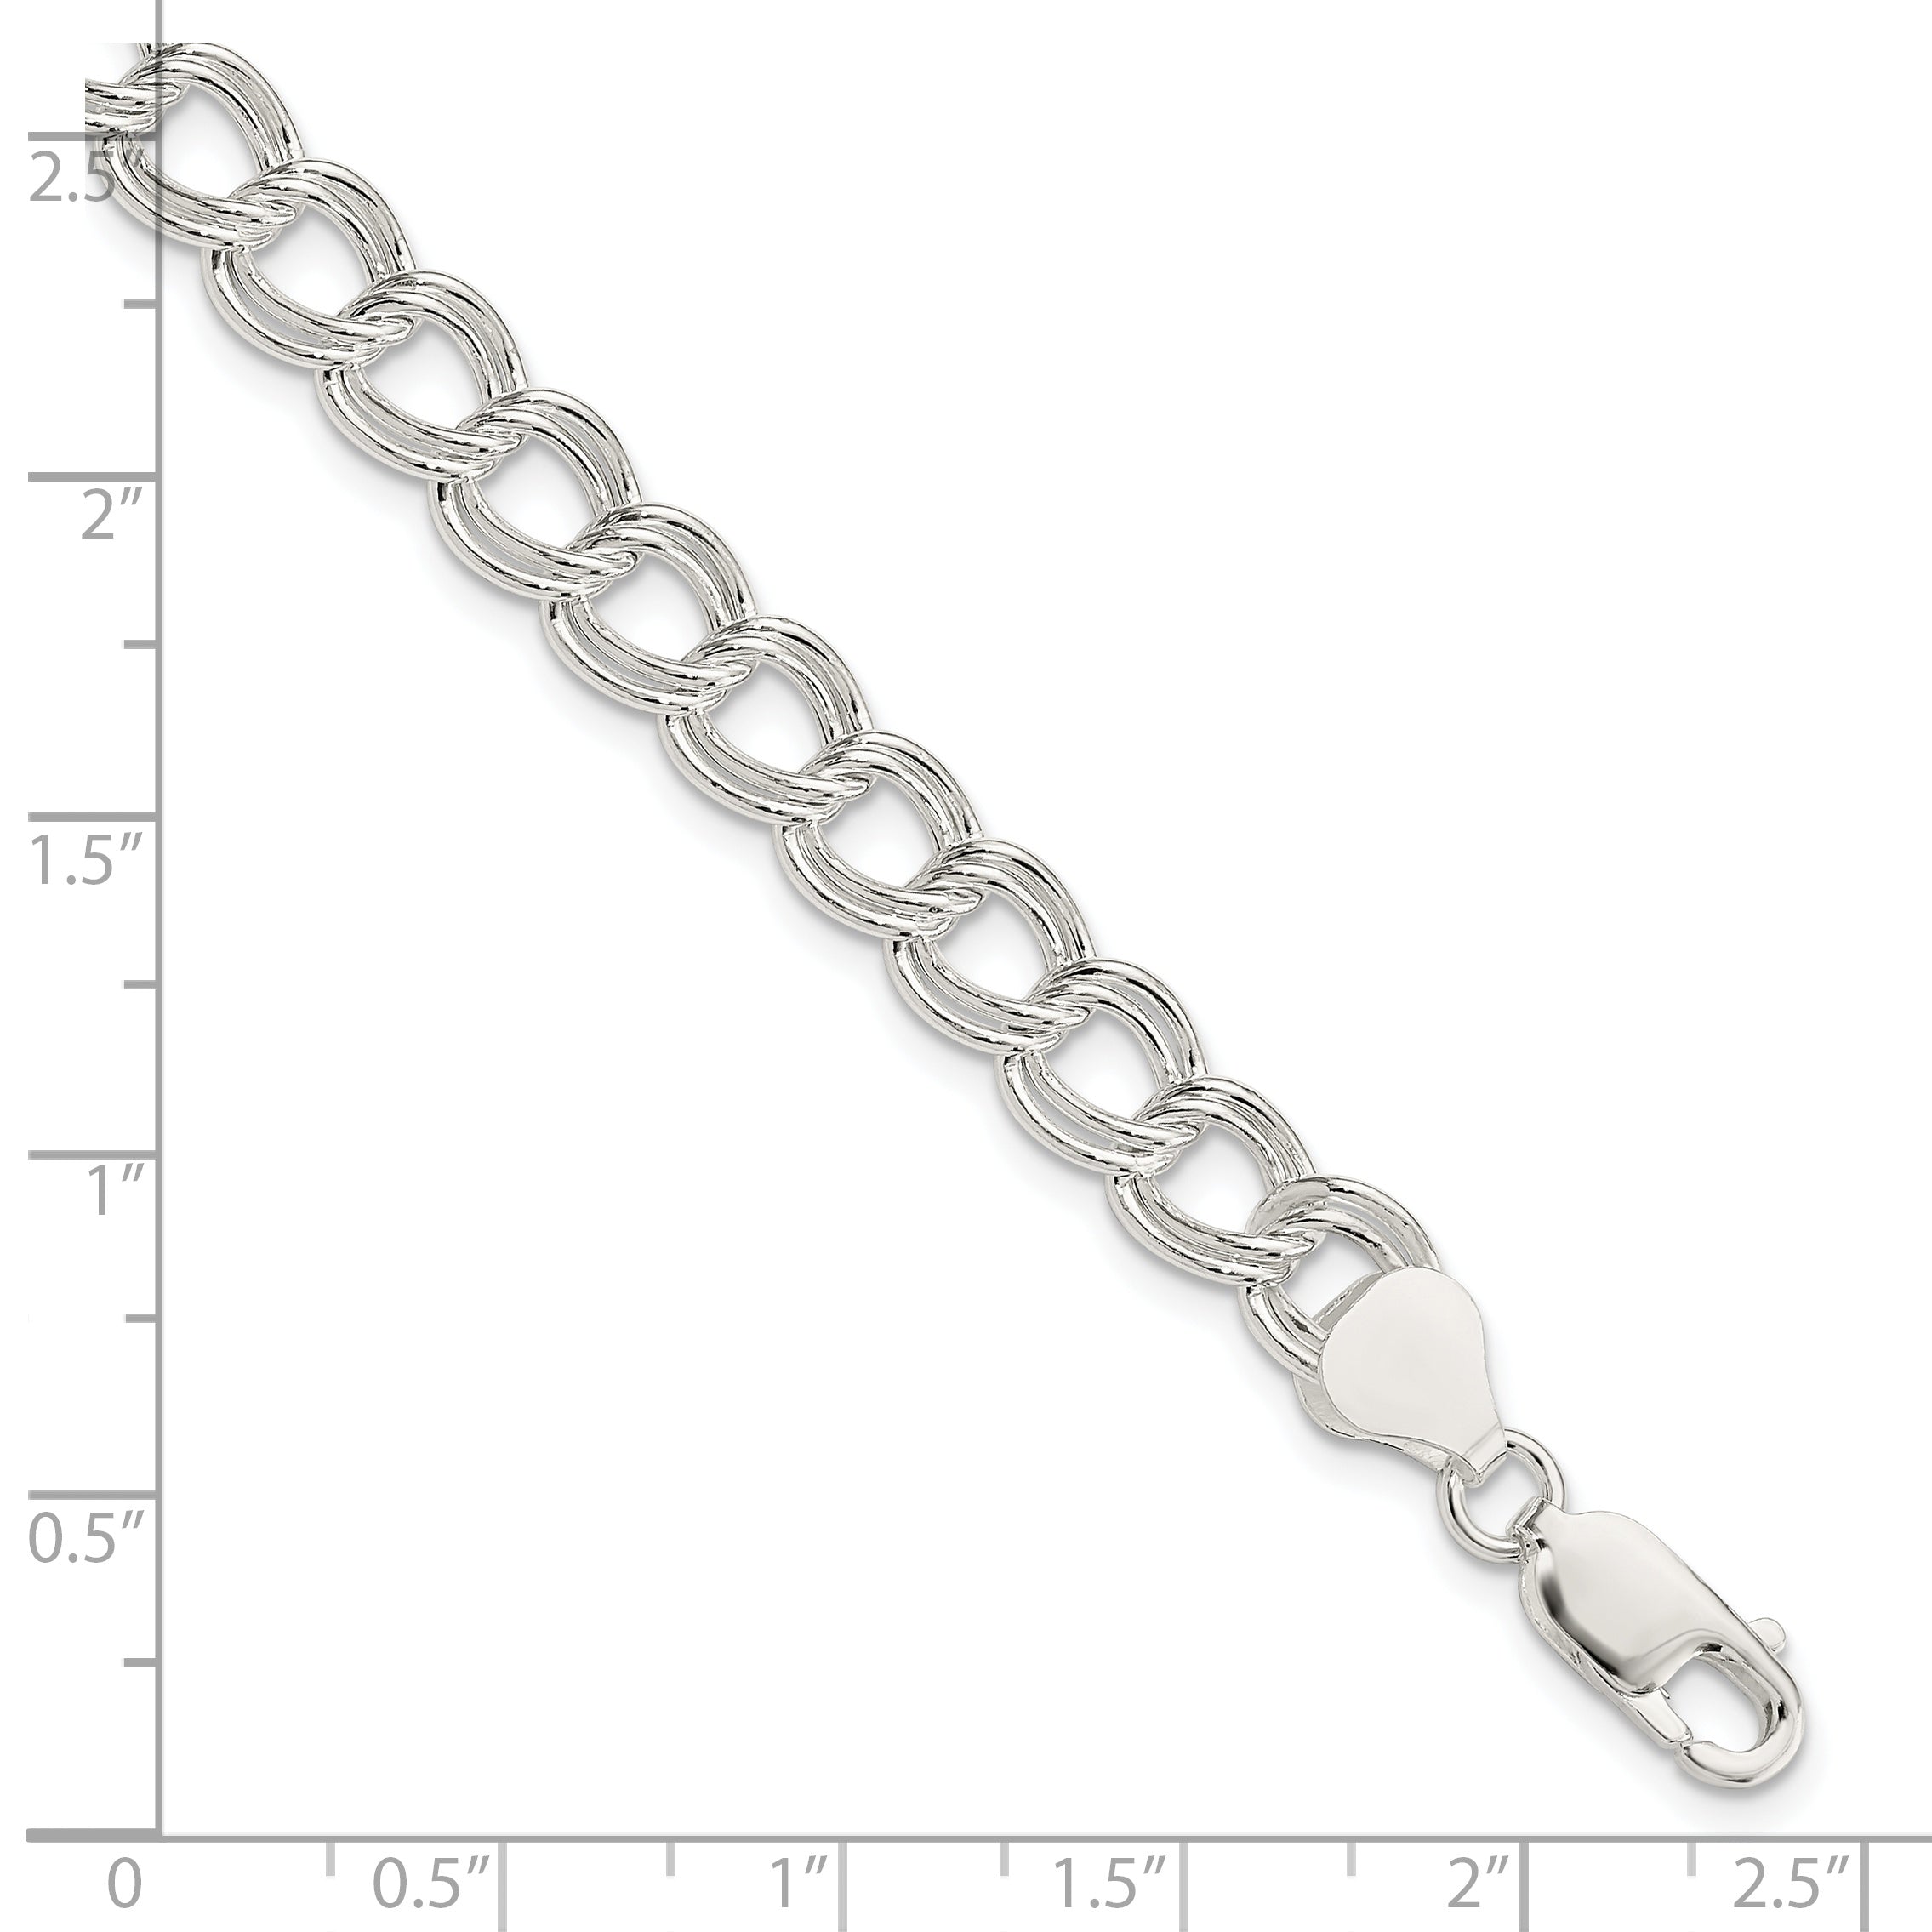 Sterling Silver 7.5mm Double Link Charm Bracelet